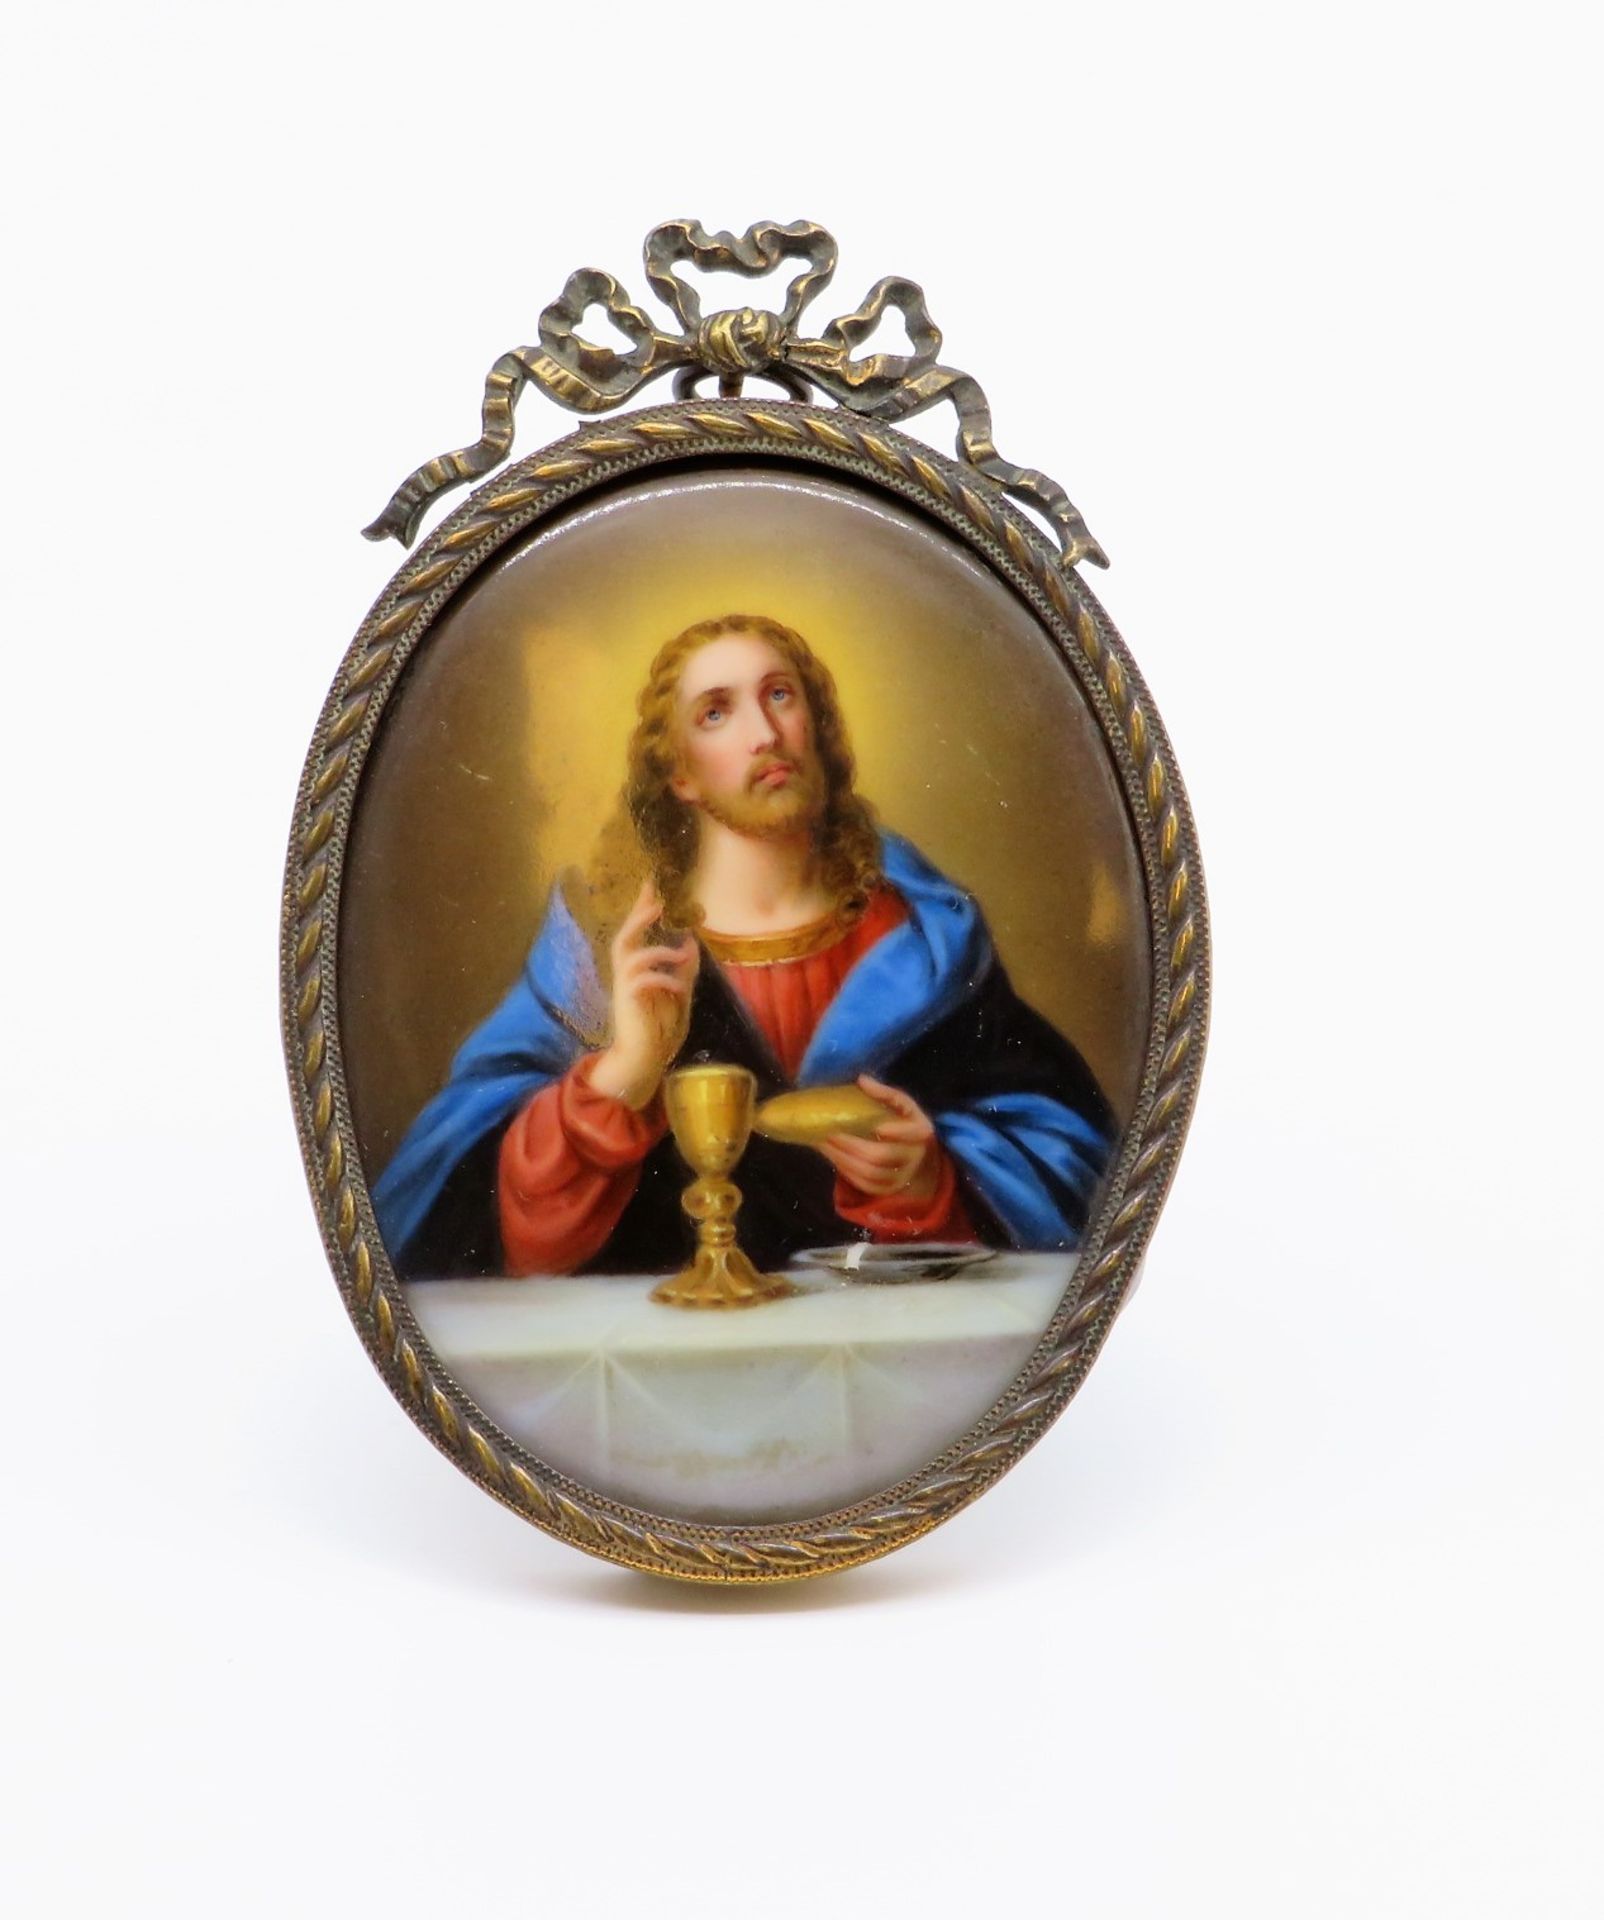 Porzellan-Miniatur, 19. Jahrhundert, "Jesus", Messingrahmen, 10,5 x 7,5 cm.